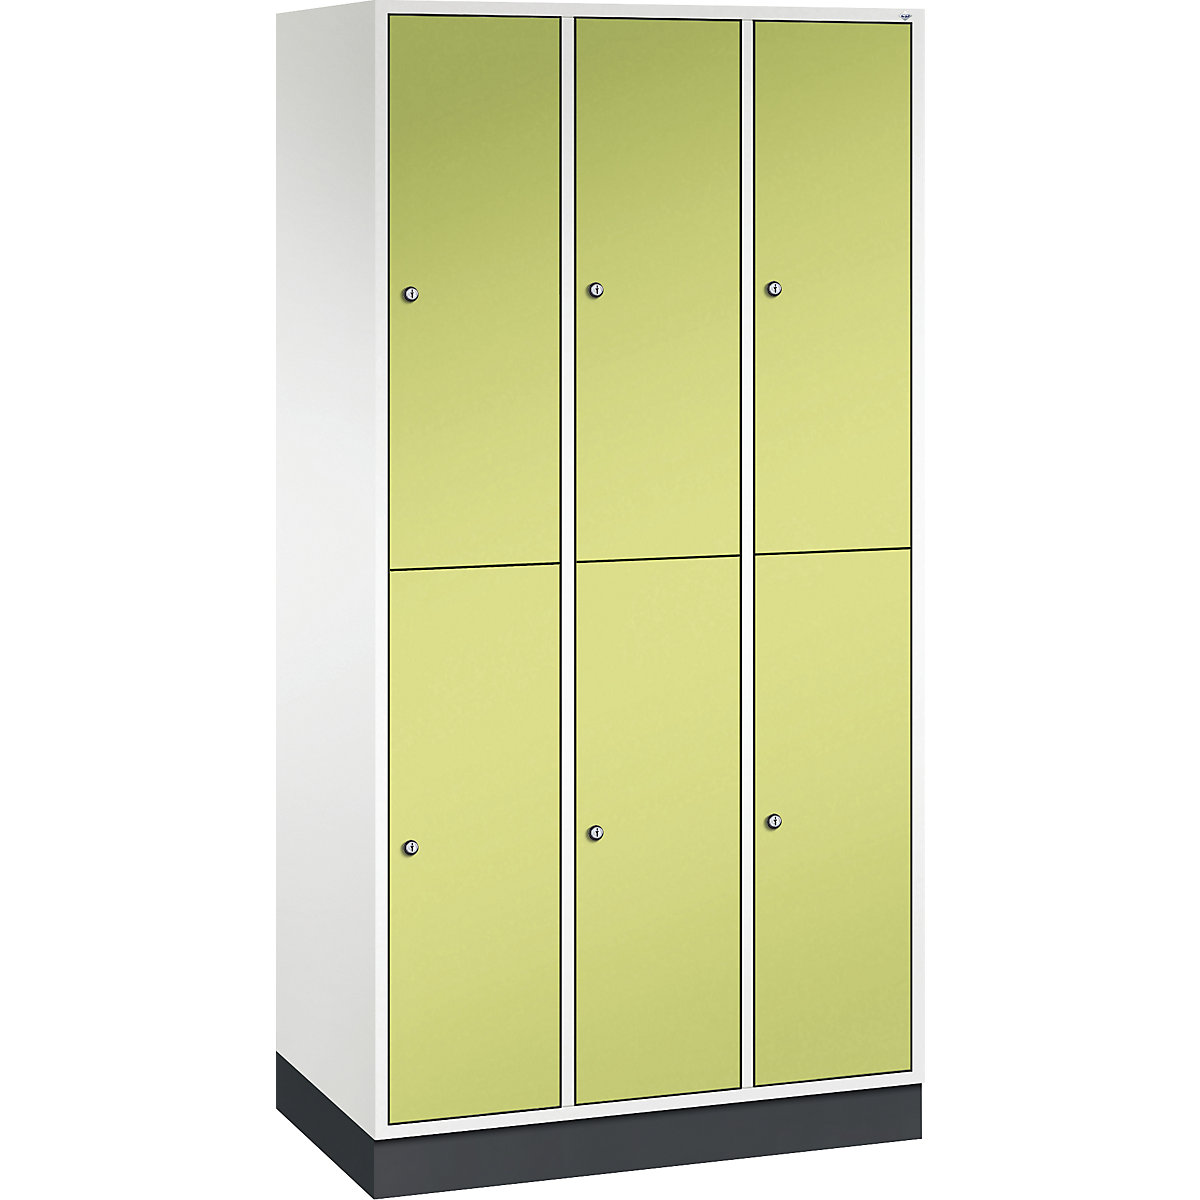 INTRO double tier steel cloakroom locker – C+P, WxD 920 x 500 mm, 6 compartments, pure white body, viridian green doors